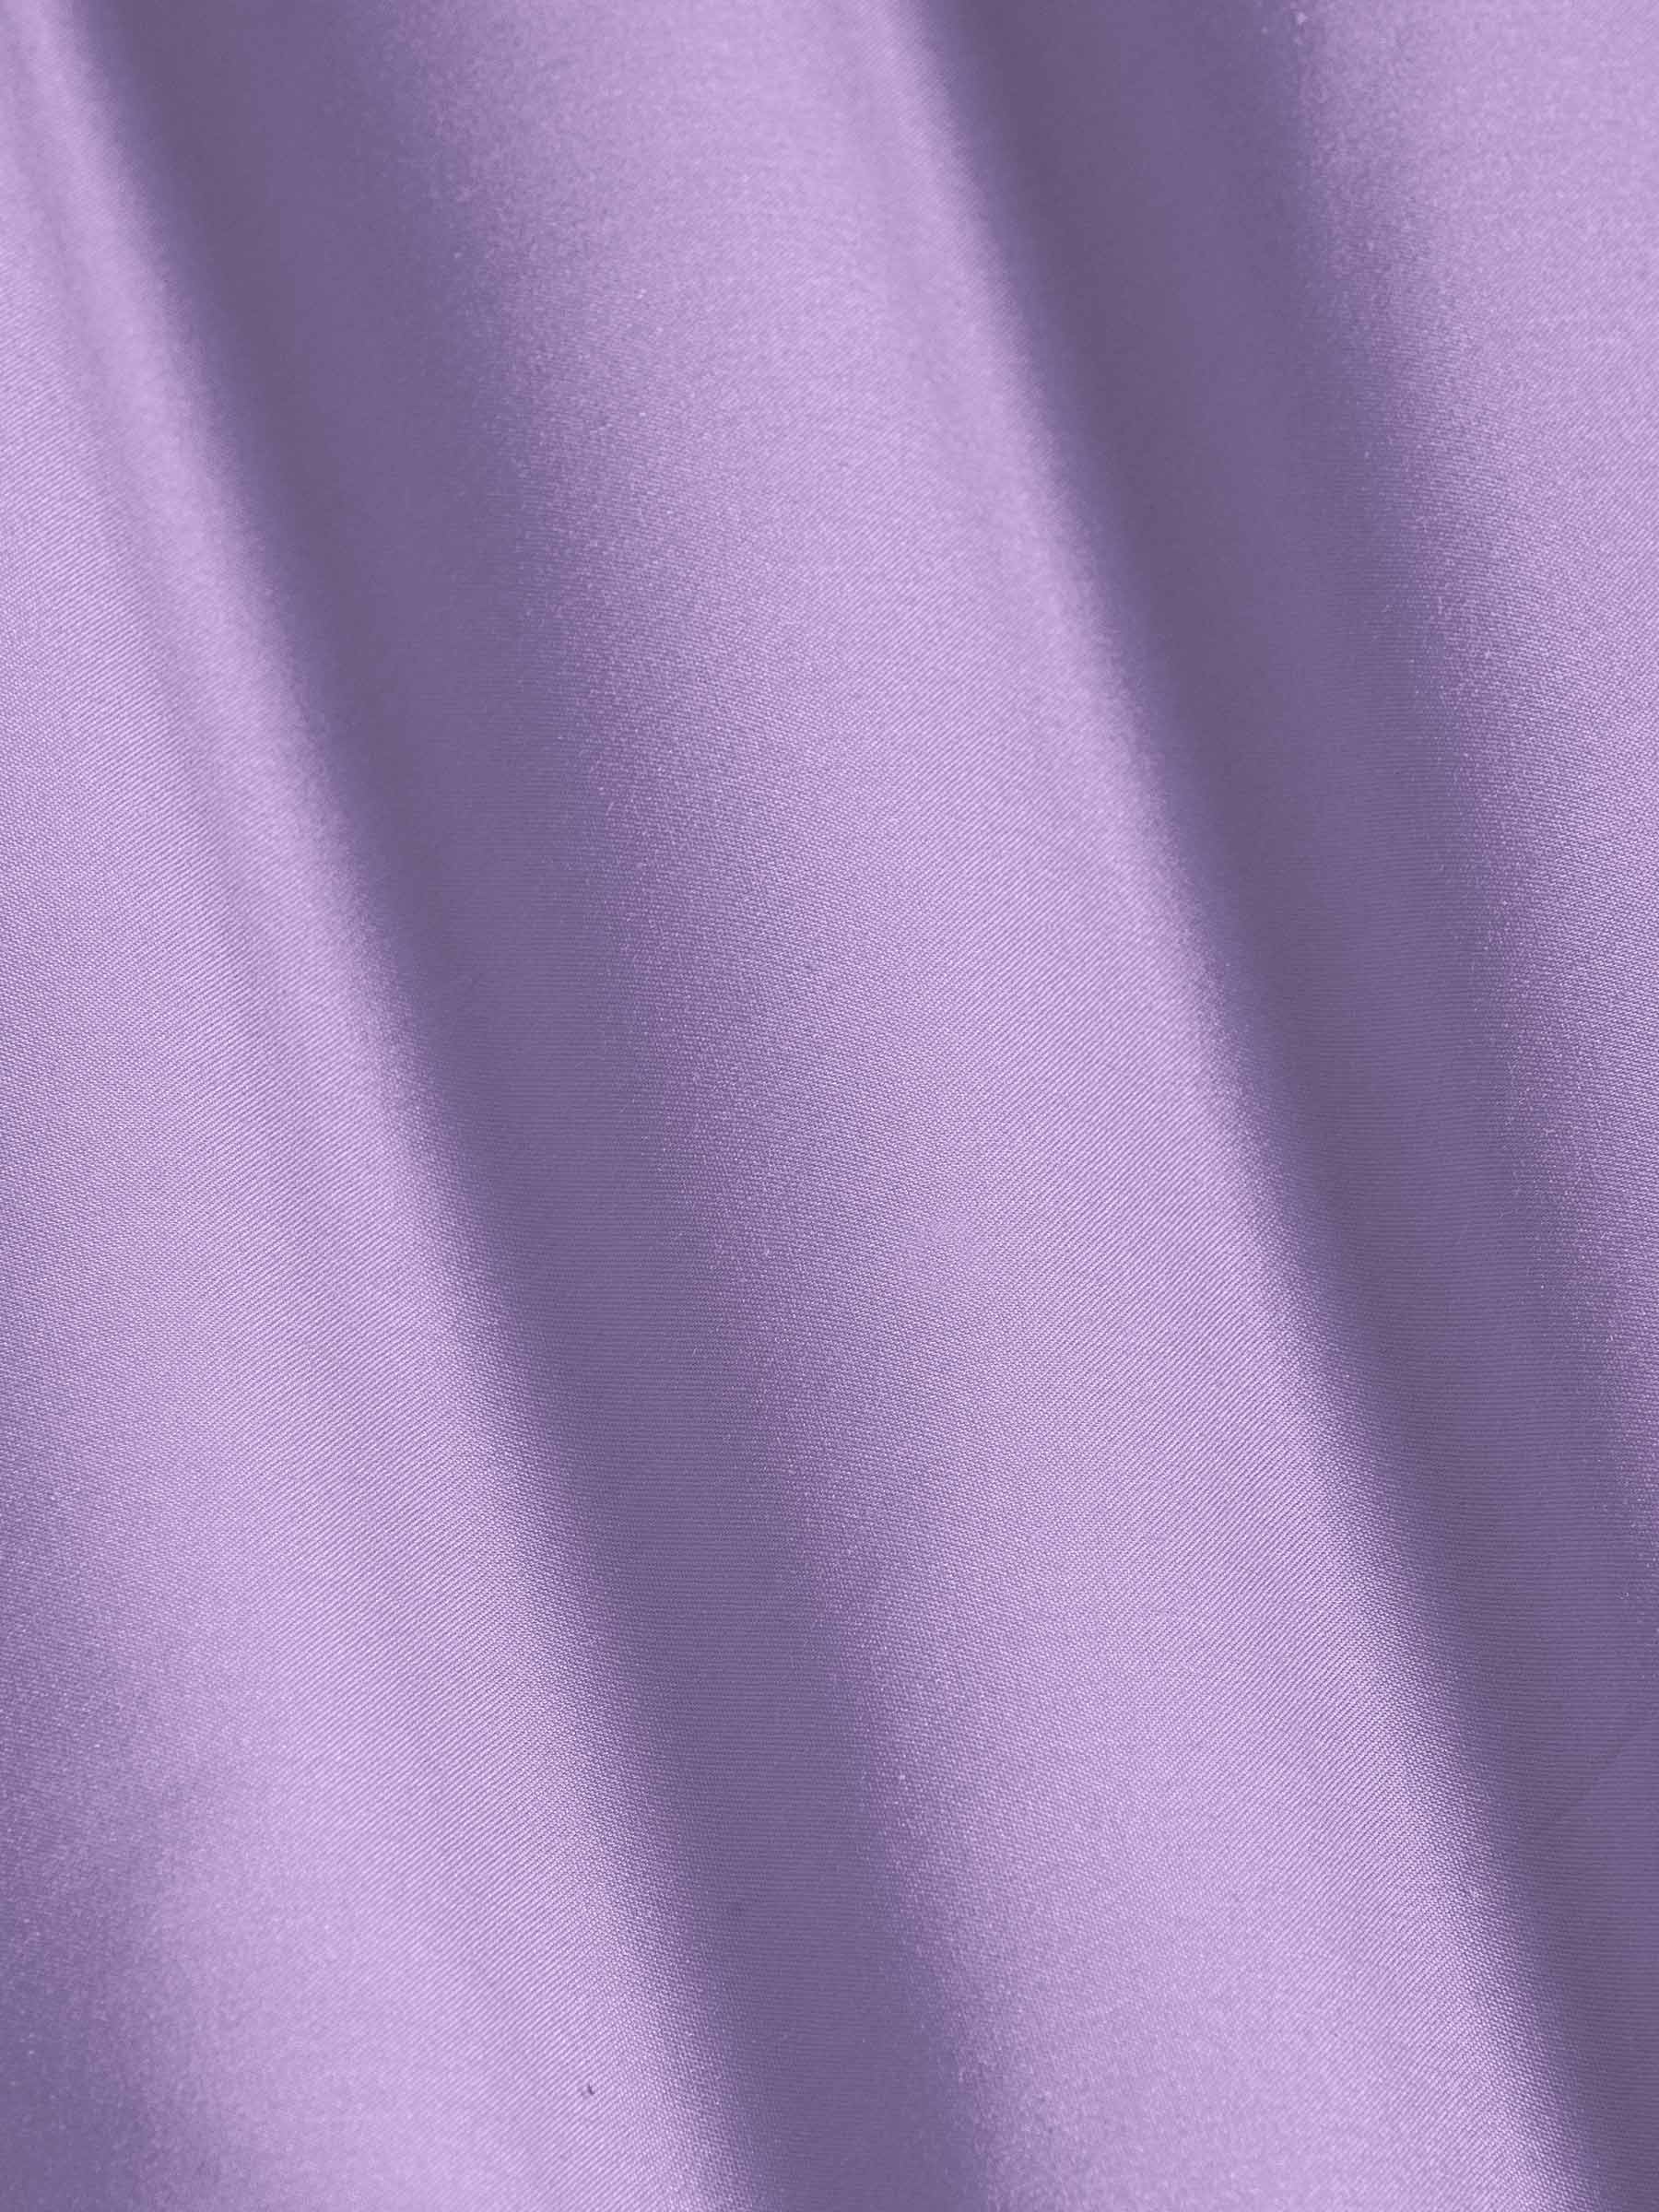 Leira Solid Lilac Overhemd Lange Mouw